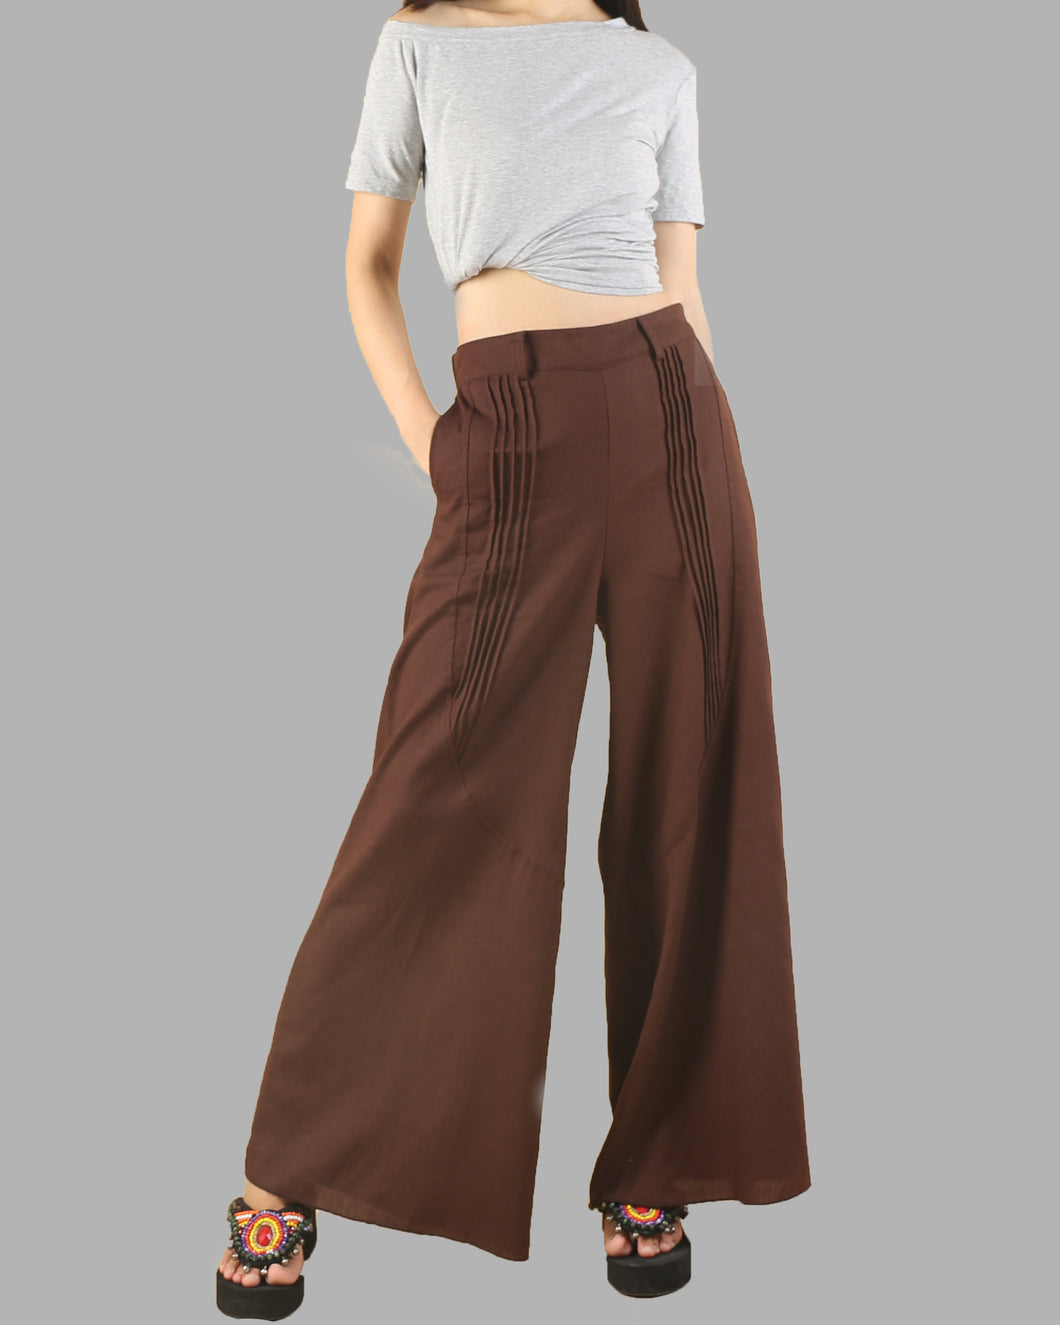 Women's Wide leg linen skirt pants/plus size trousers/oversize casual customized trousers(K1702)